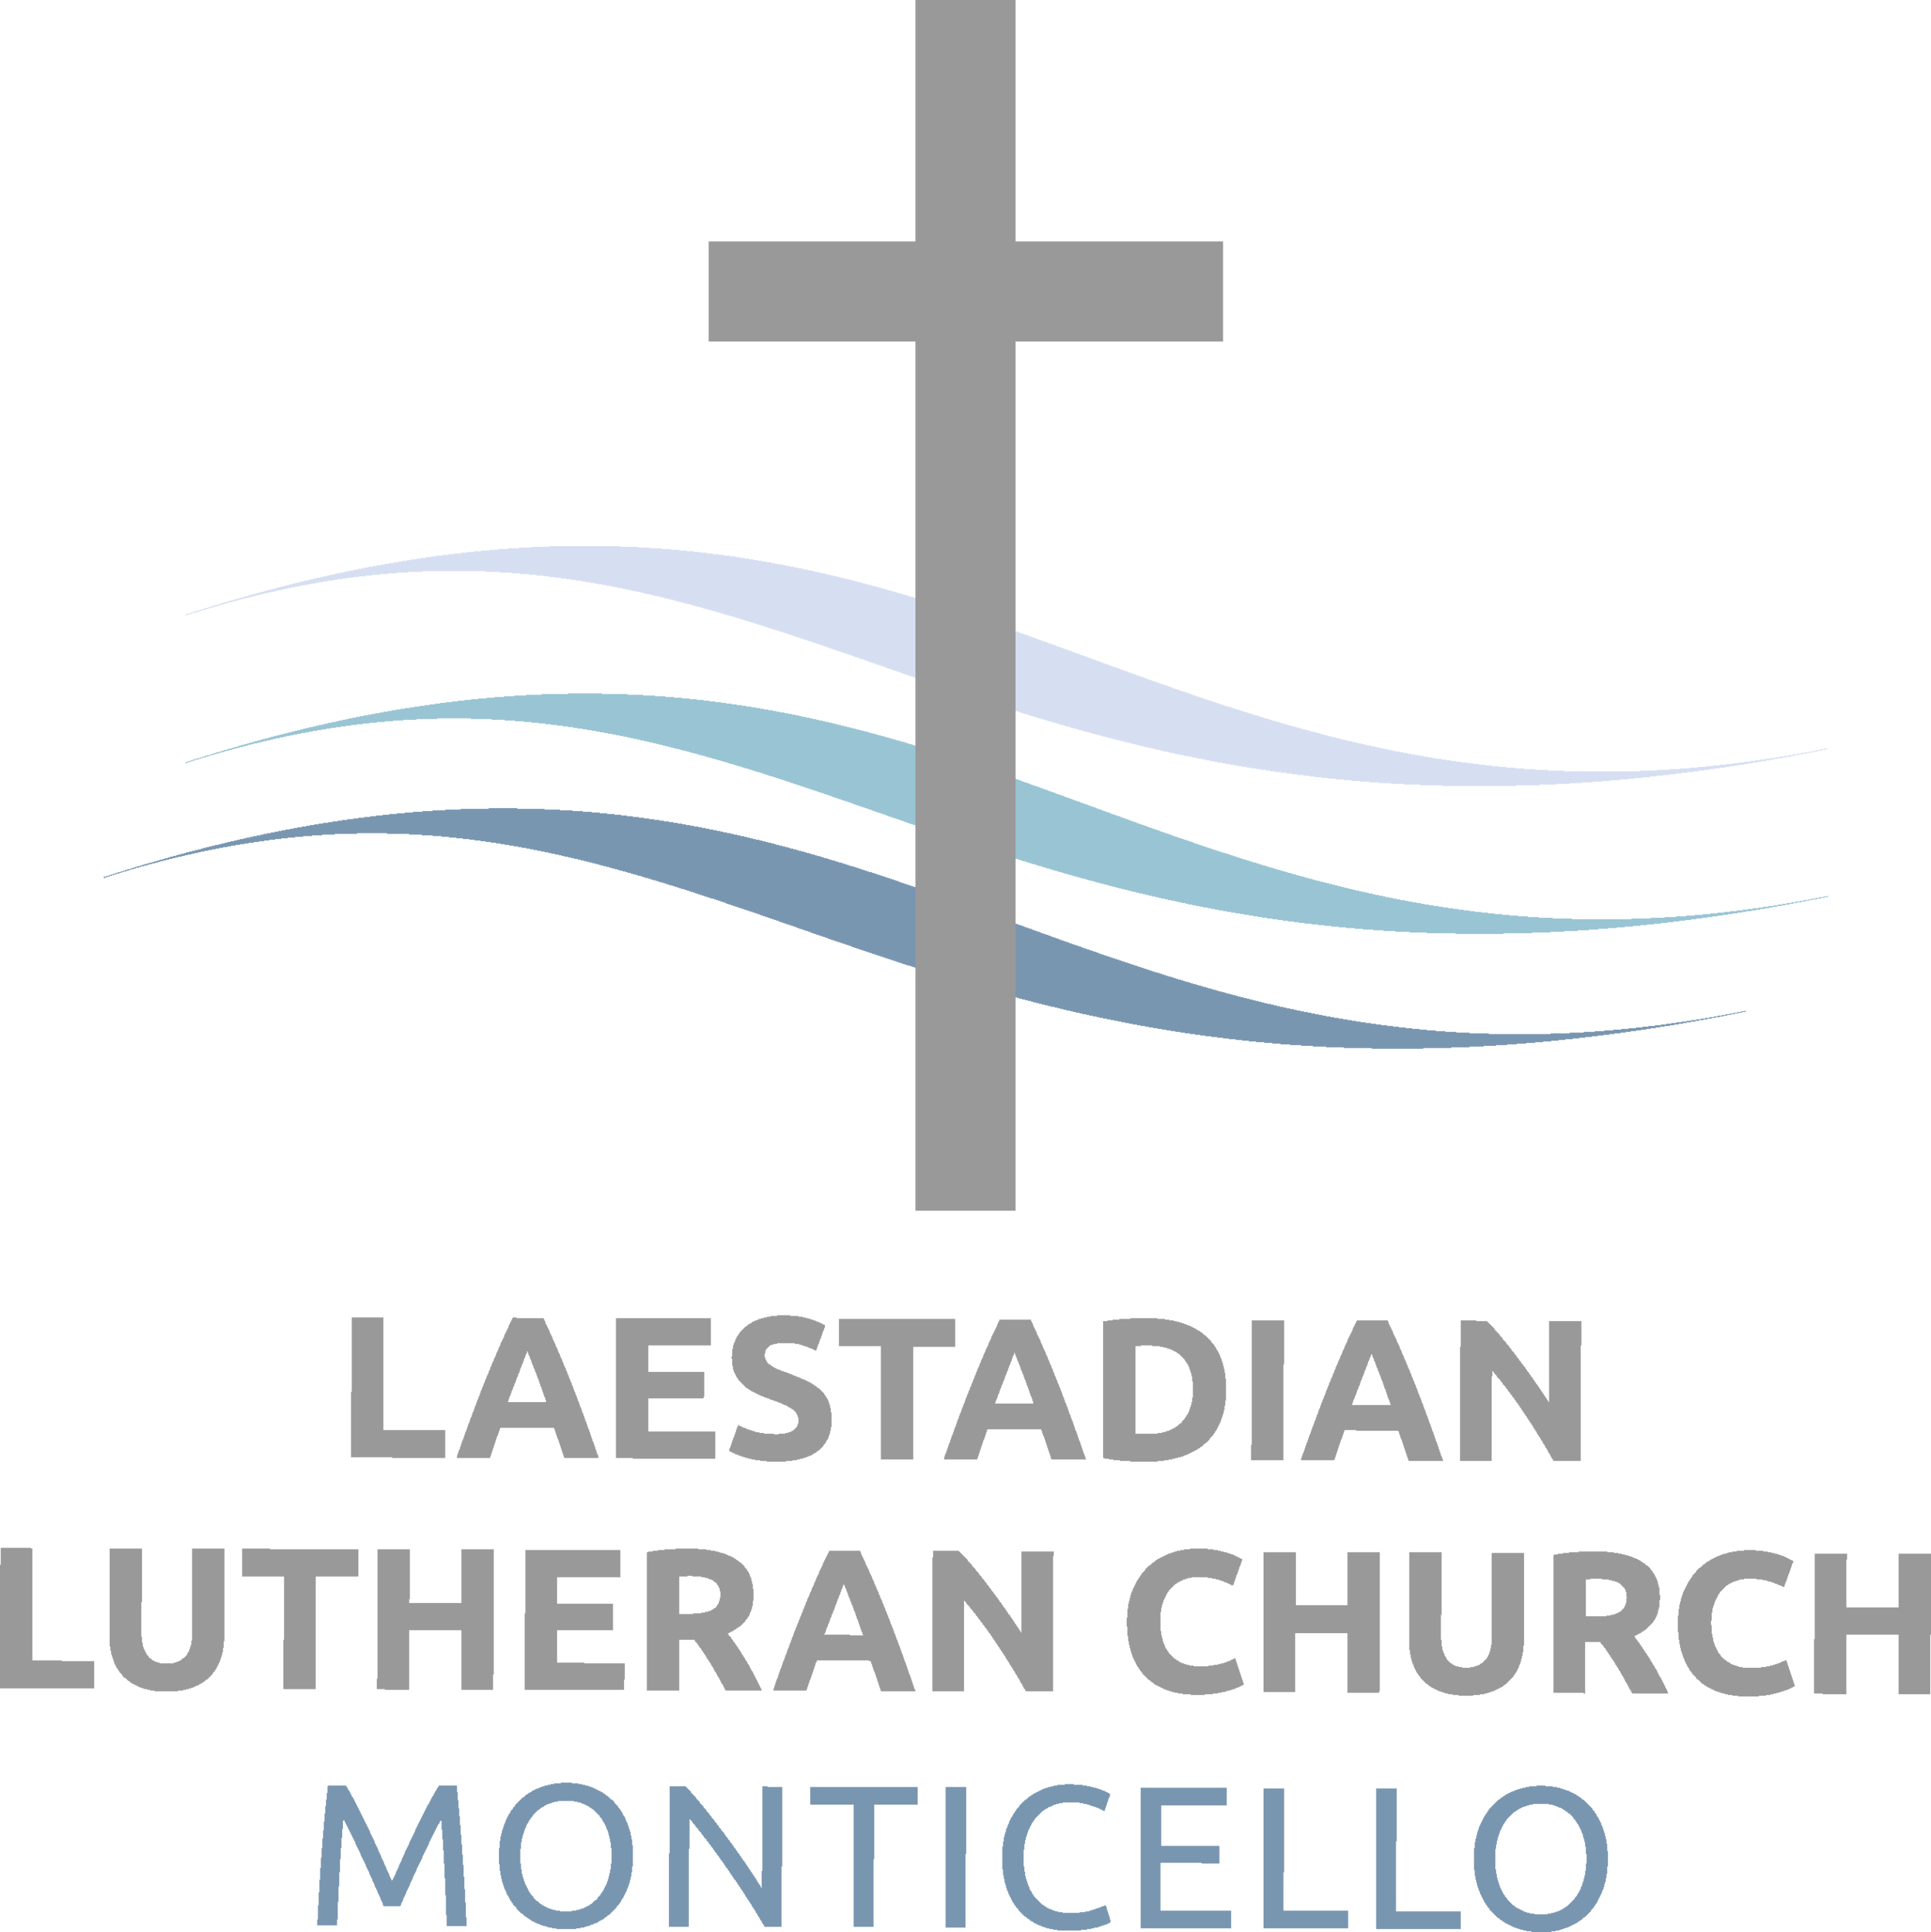 Laestadian Lutheran Church of Monticello